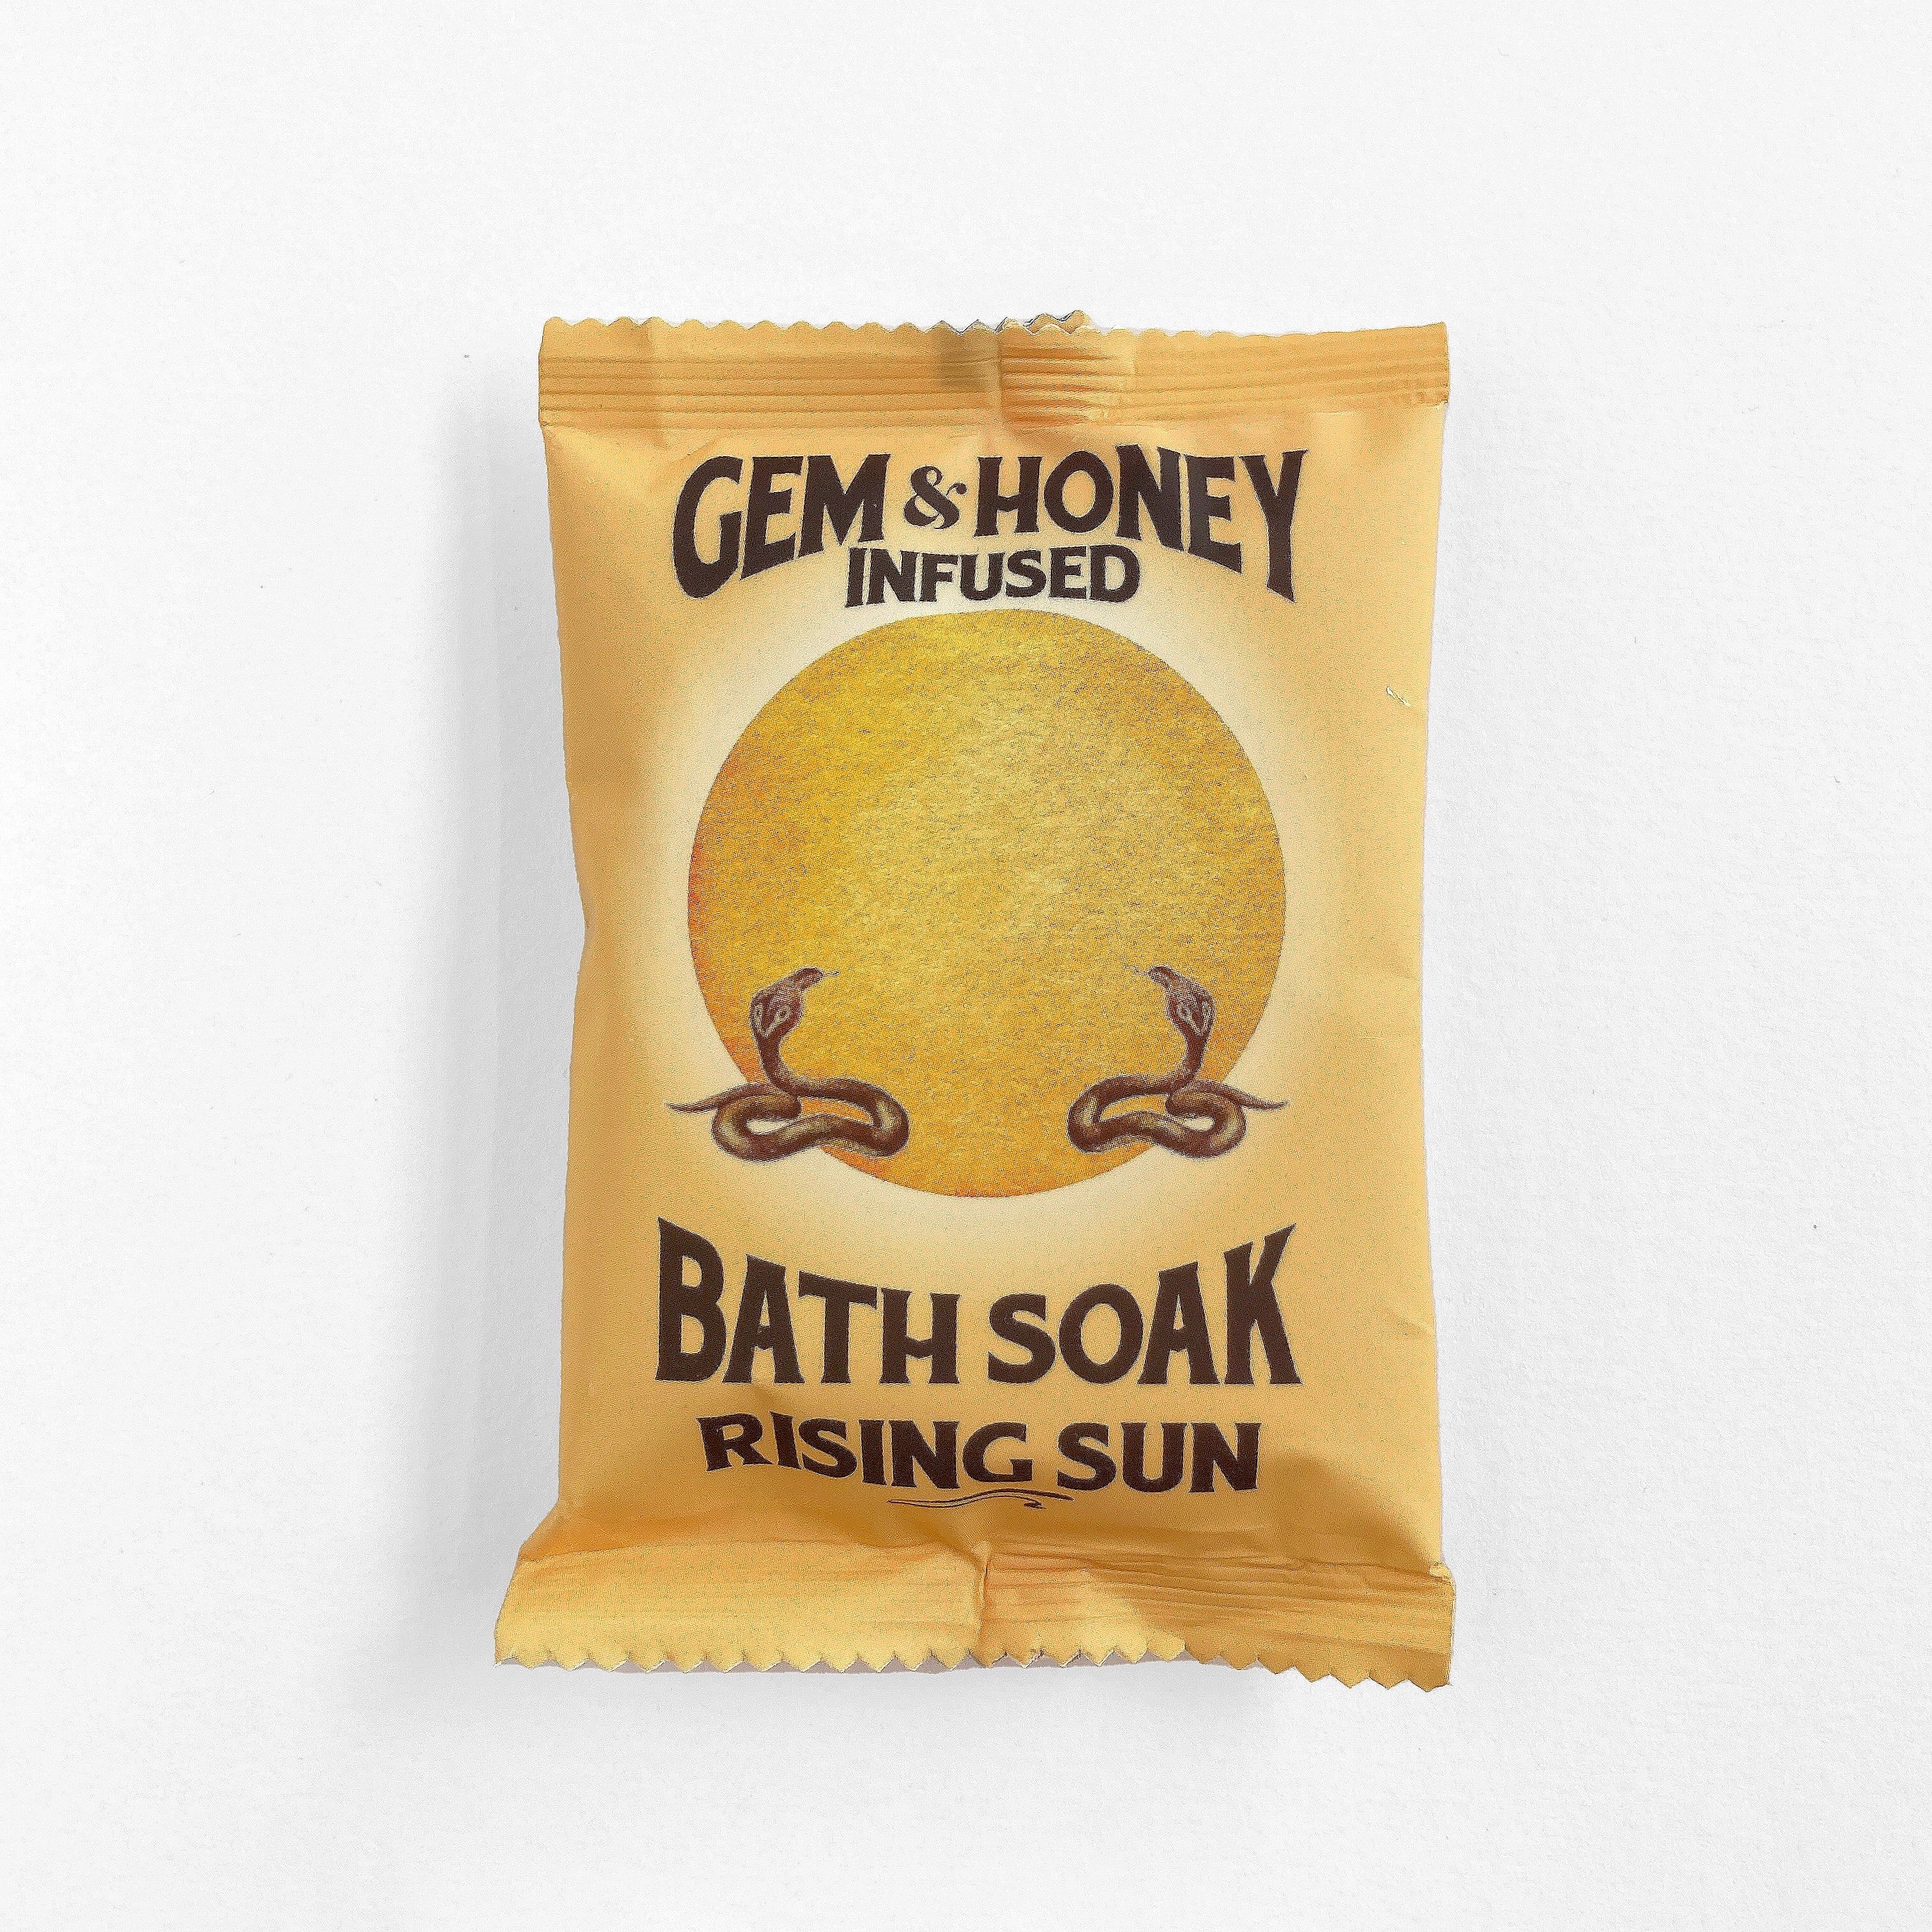 Rising Sun Bath Soak Bath WILD YONDER BOTANICALS 